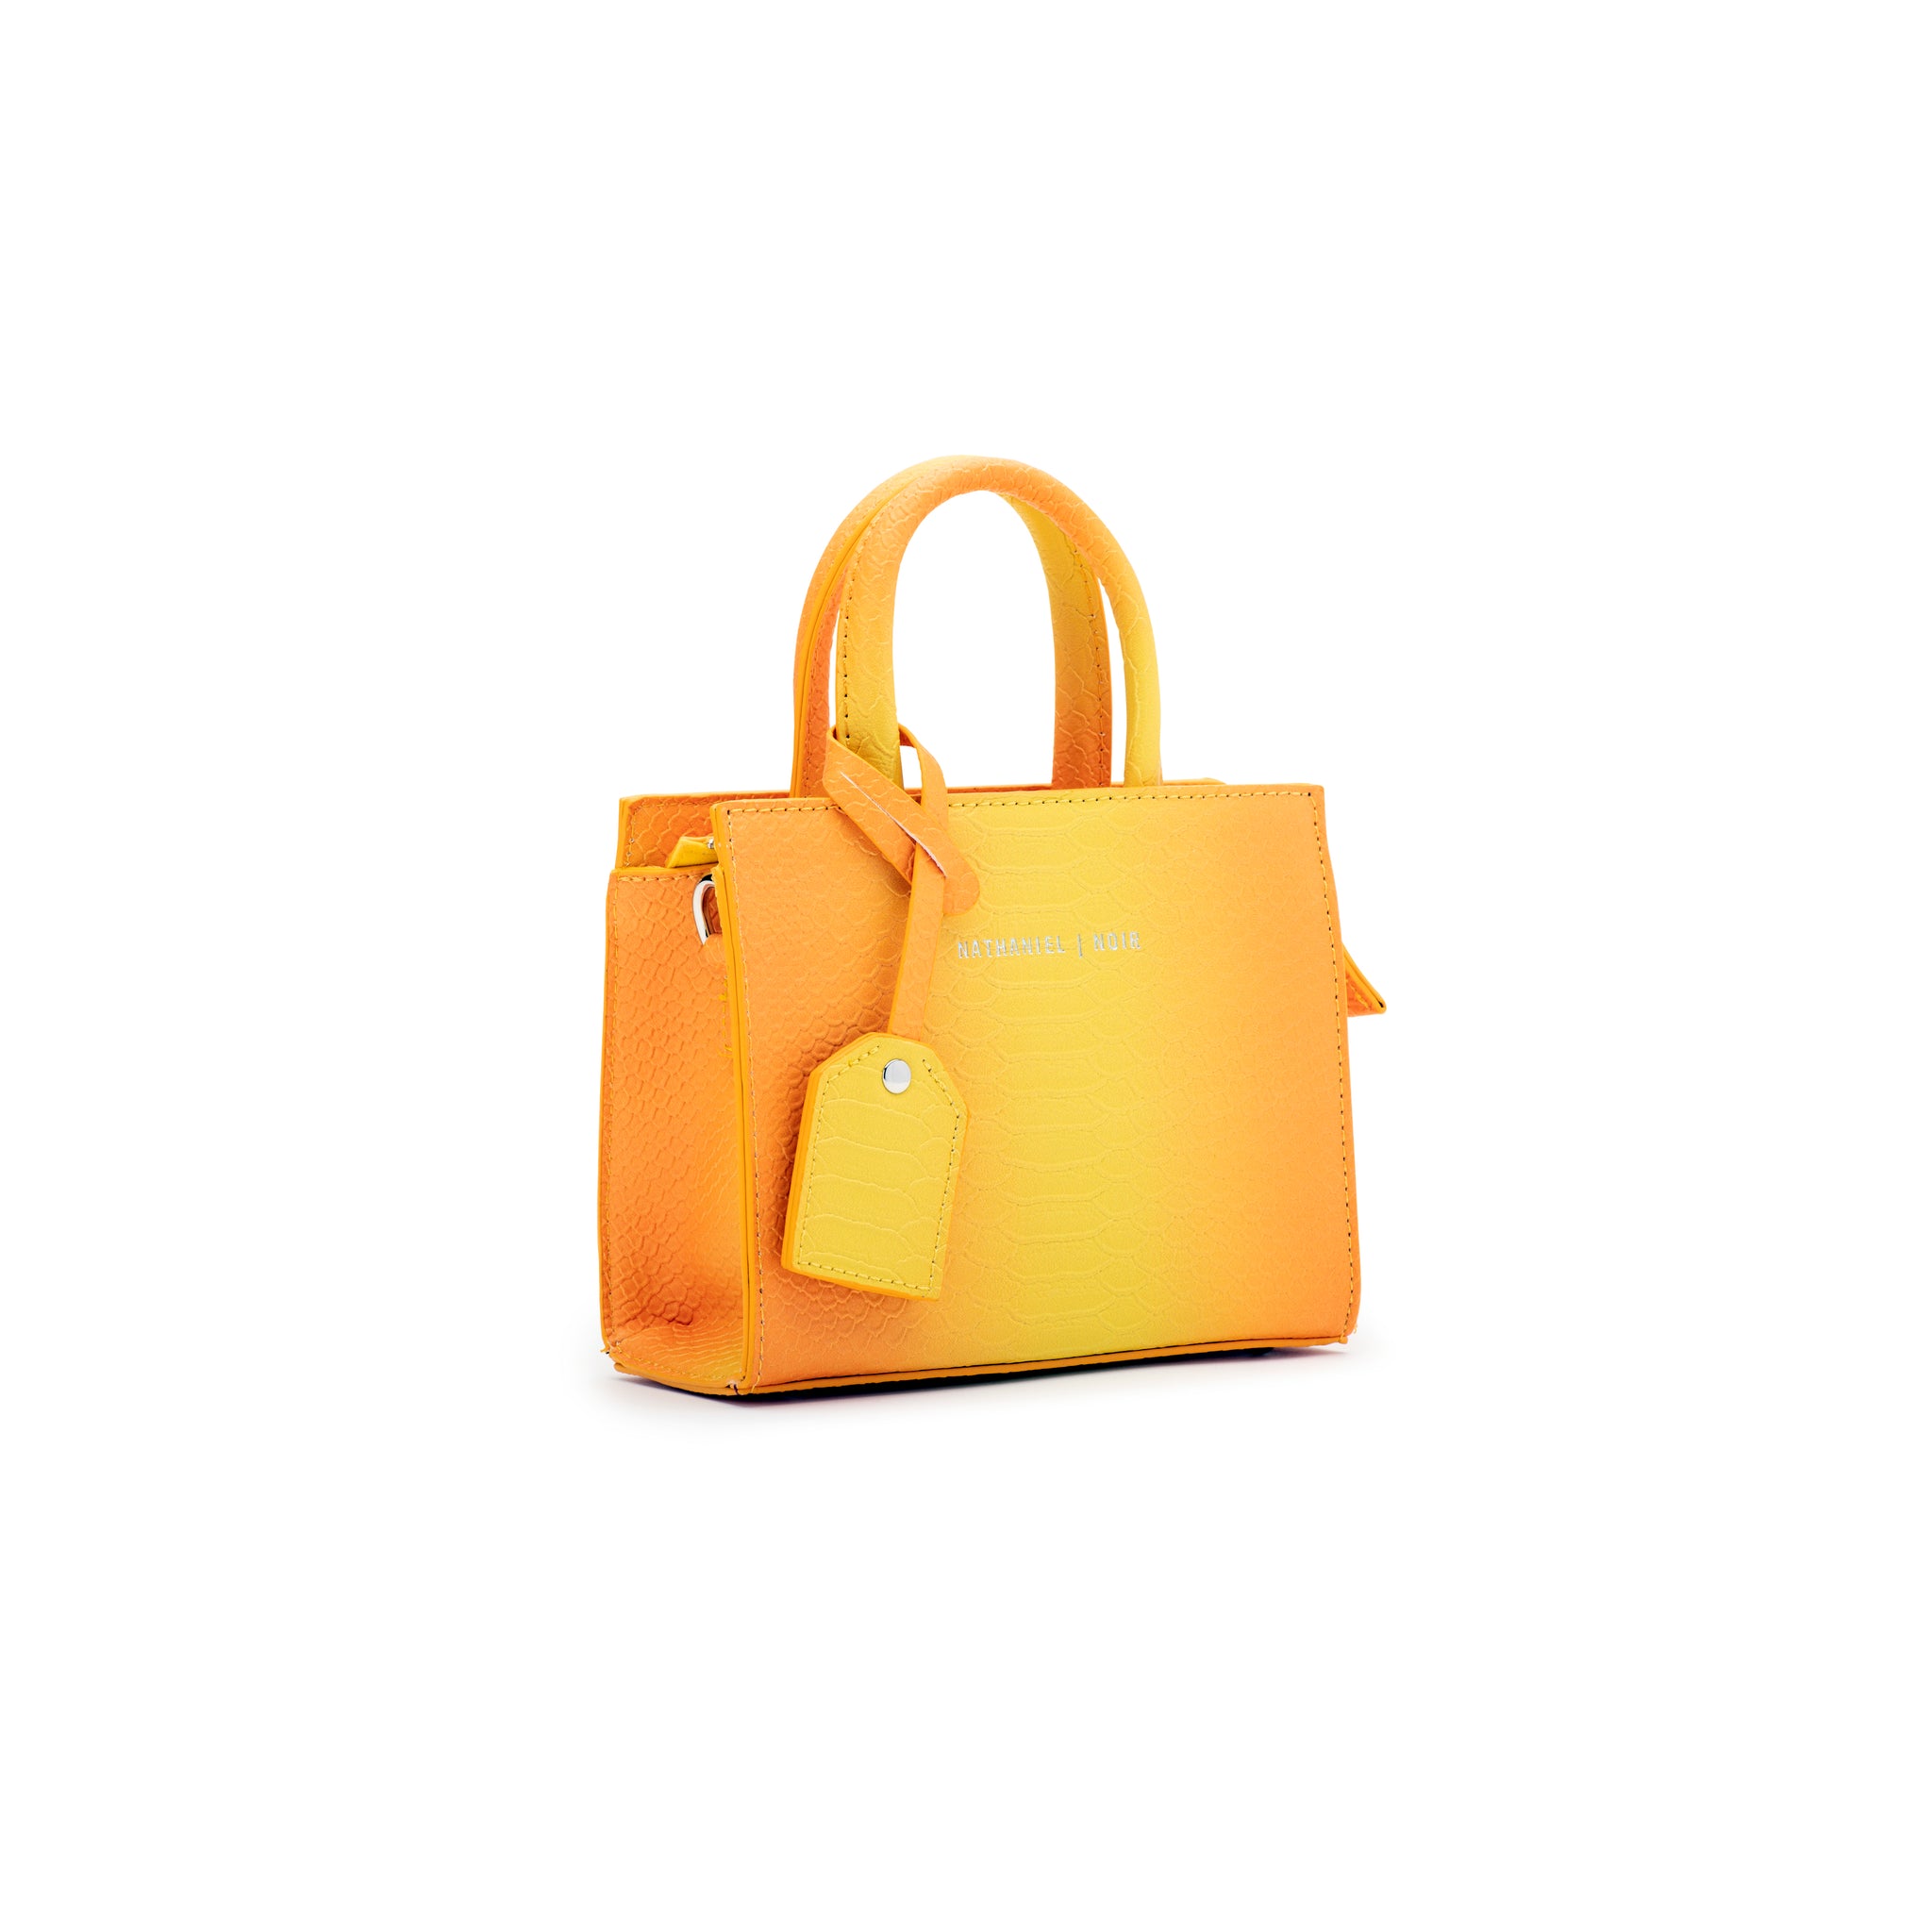 Lavie 1 Yellow Small Box Handbag - Buy Lavie 1 Yellow Small Box Handbag  online in India